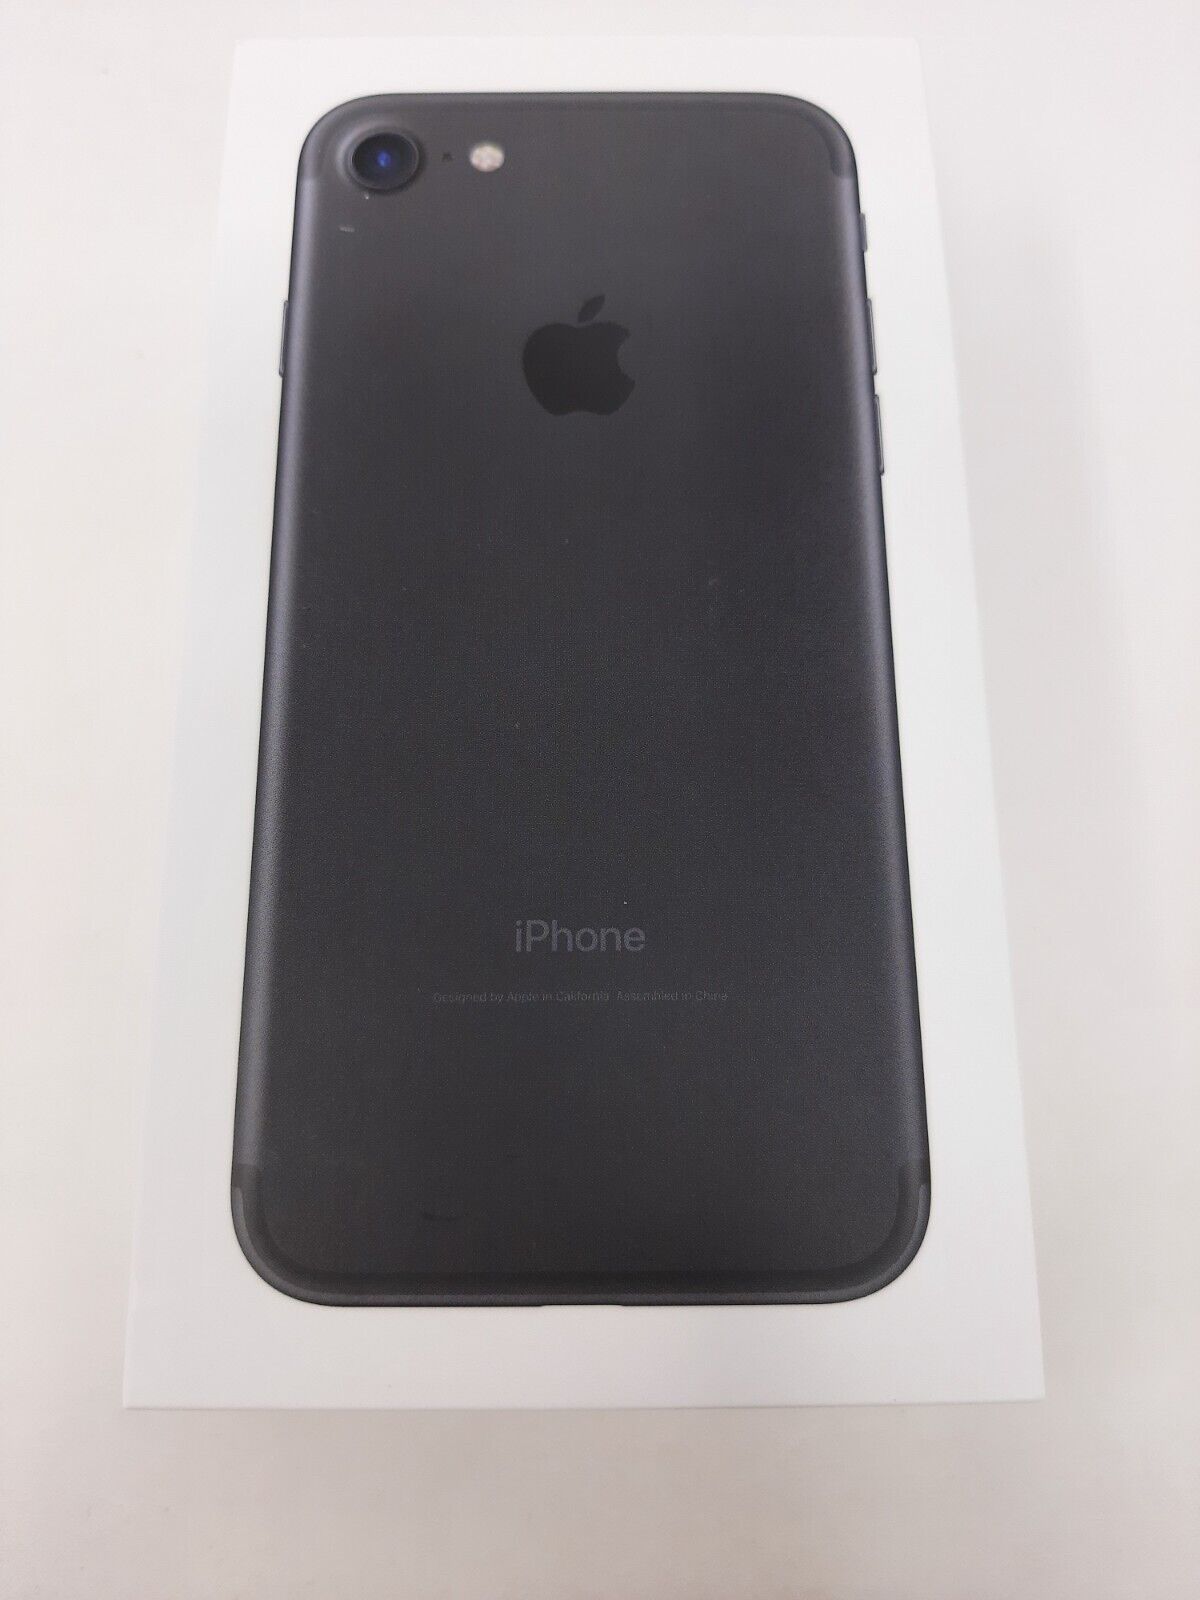 NEW Apple iPhone 7 - 32GB - Black (Verizon/Unlocked) A1660